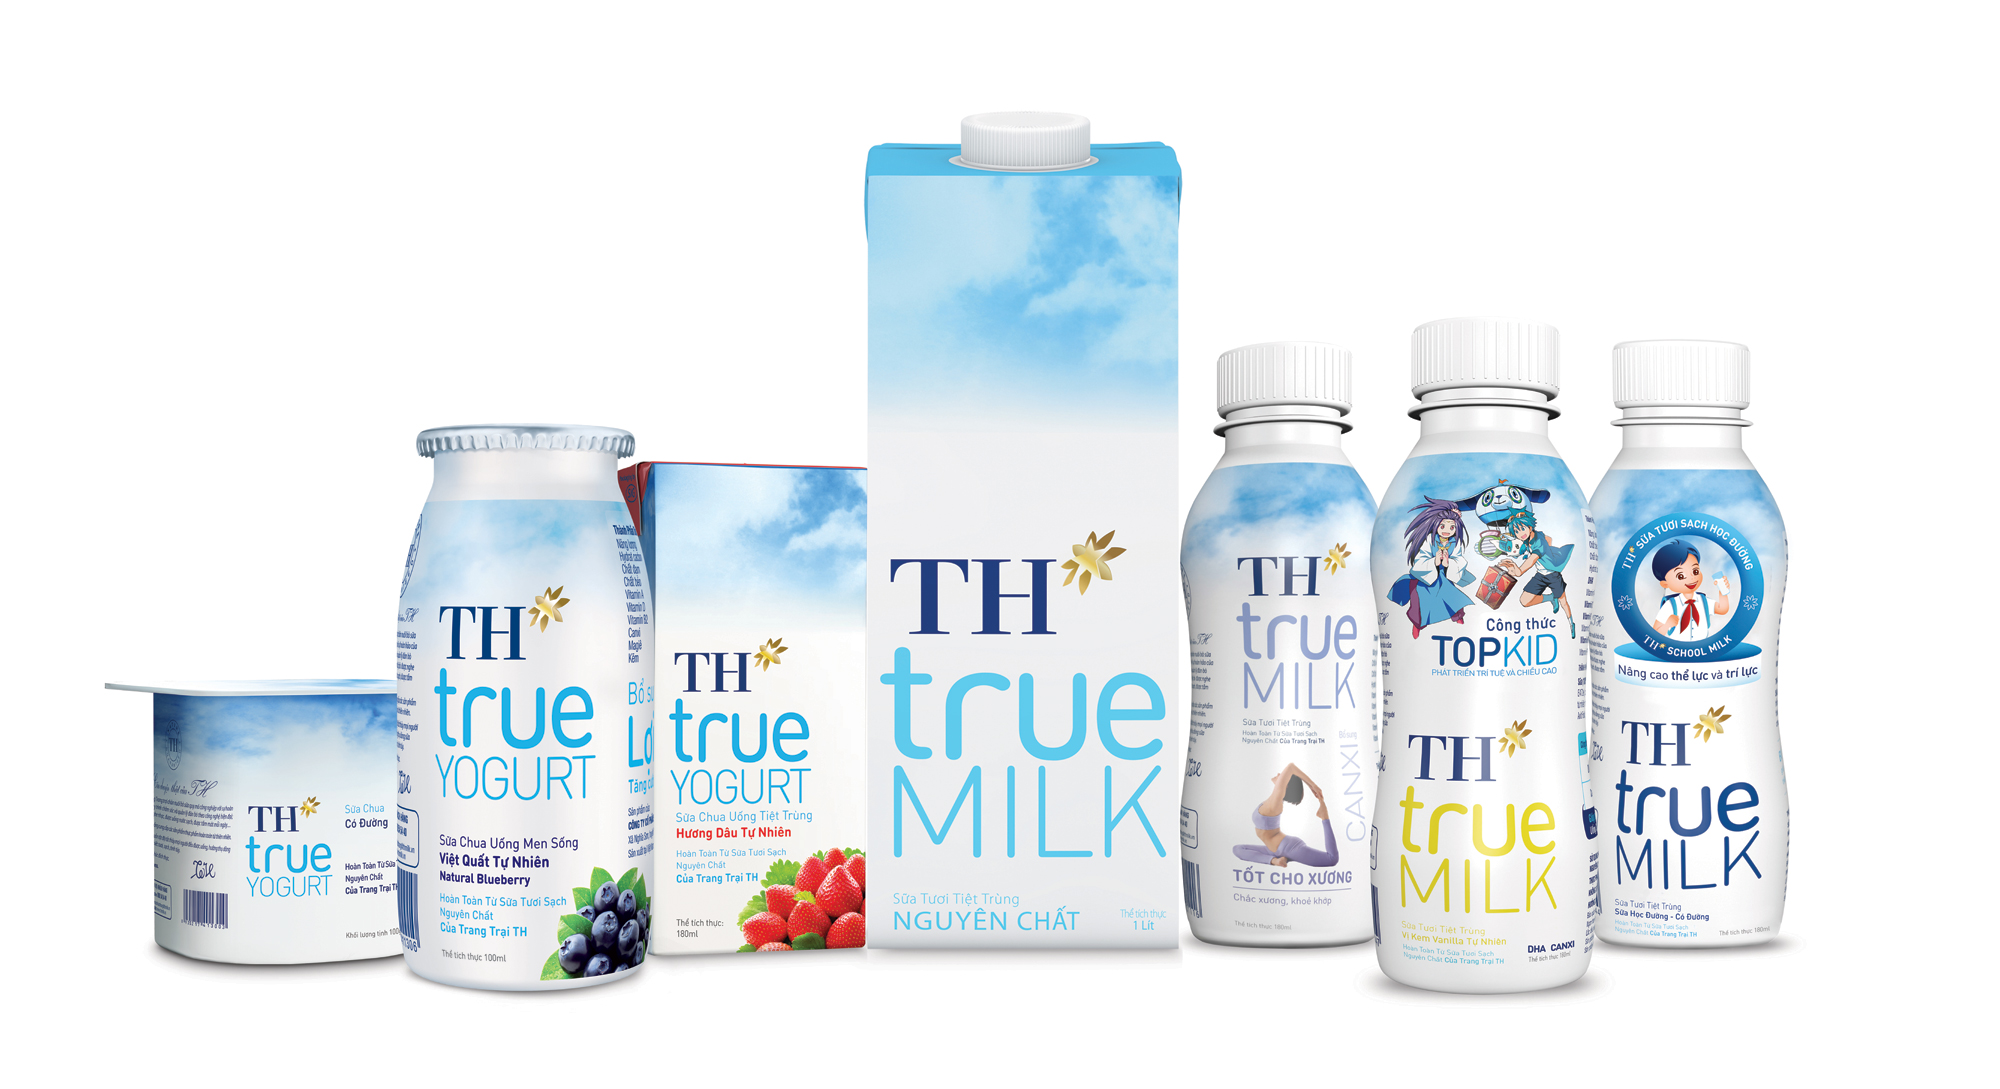 The best fresh milk brands today